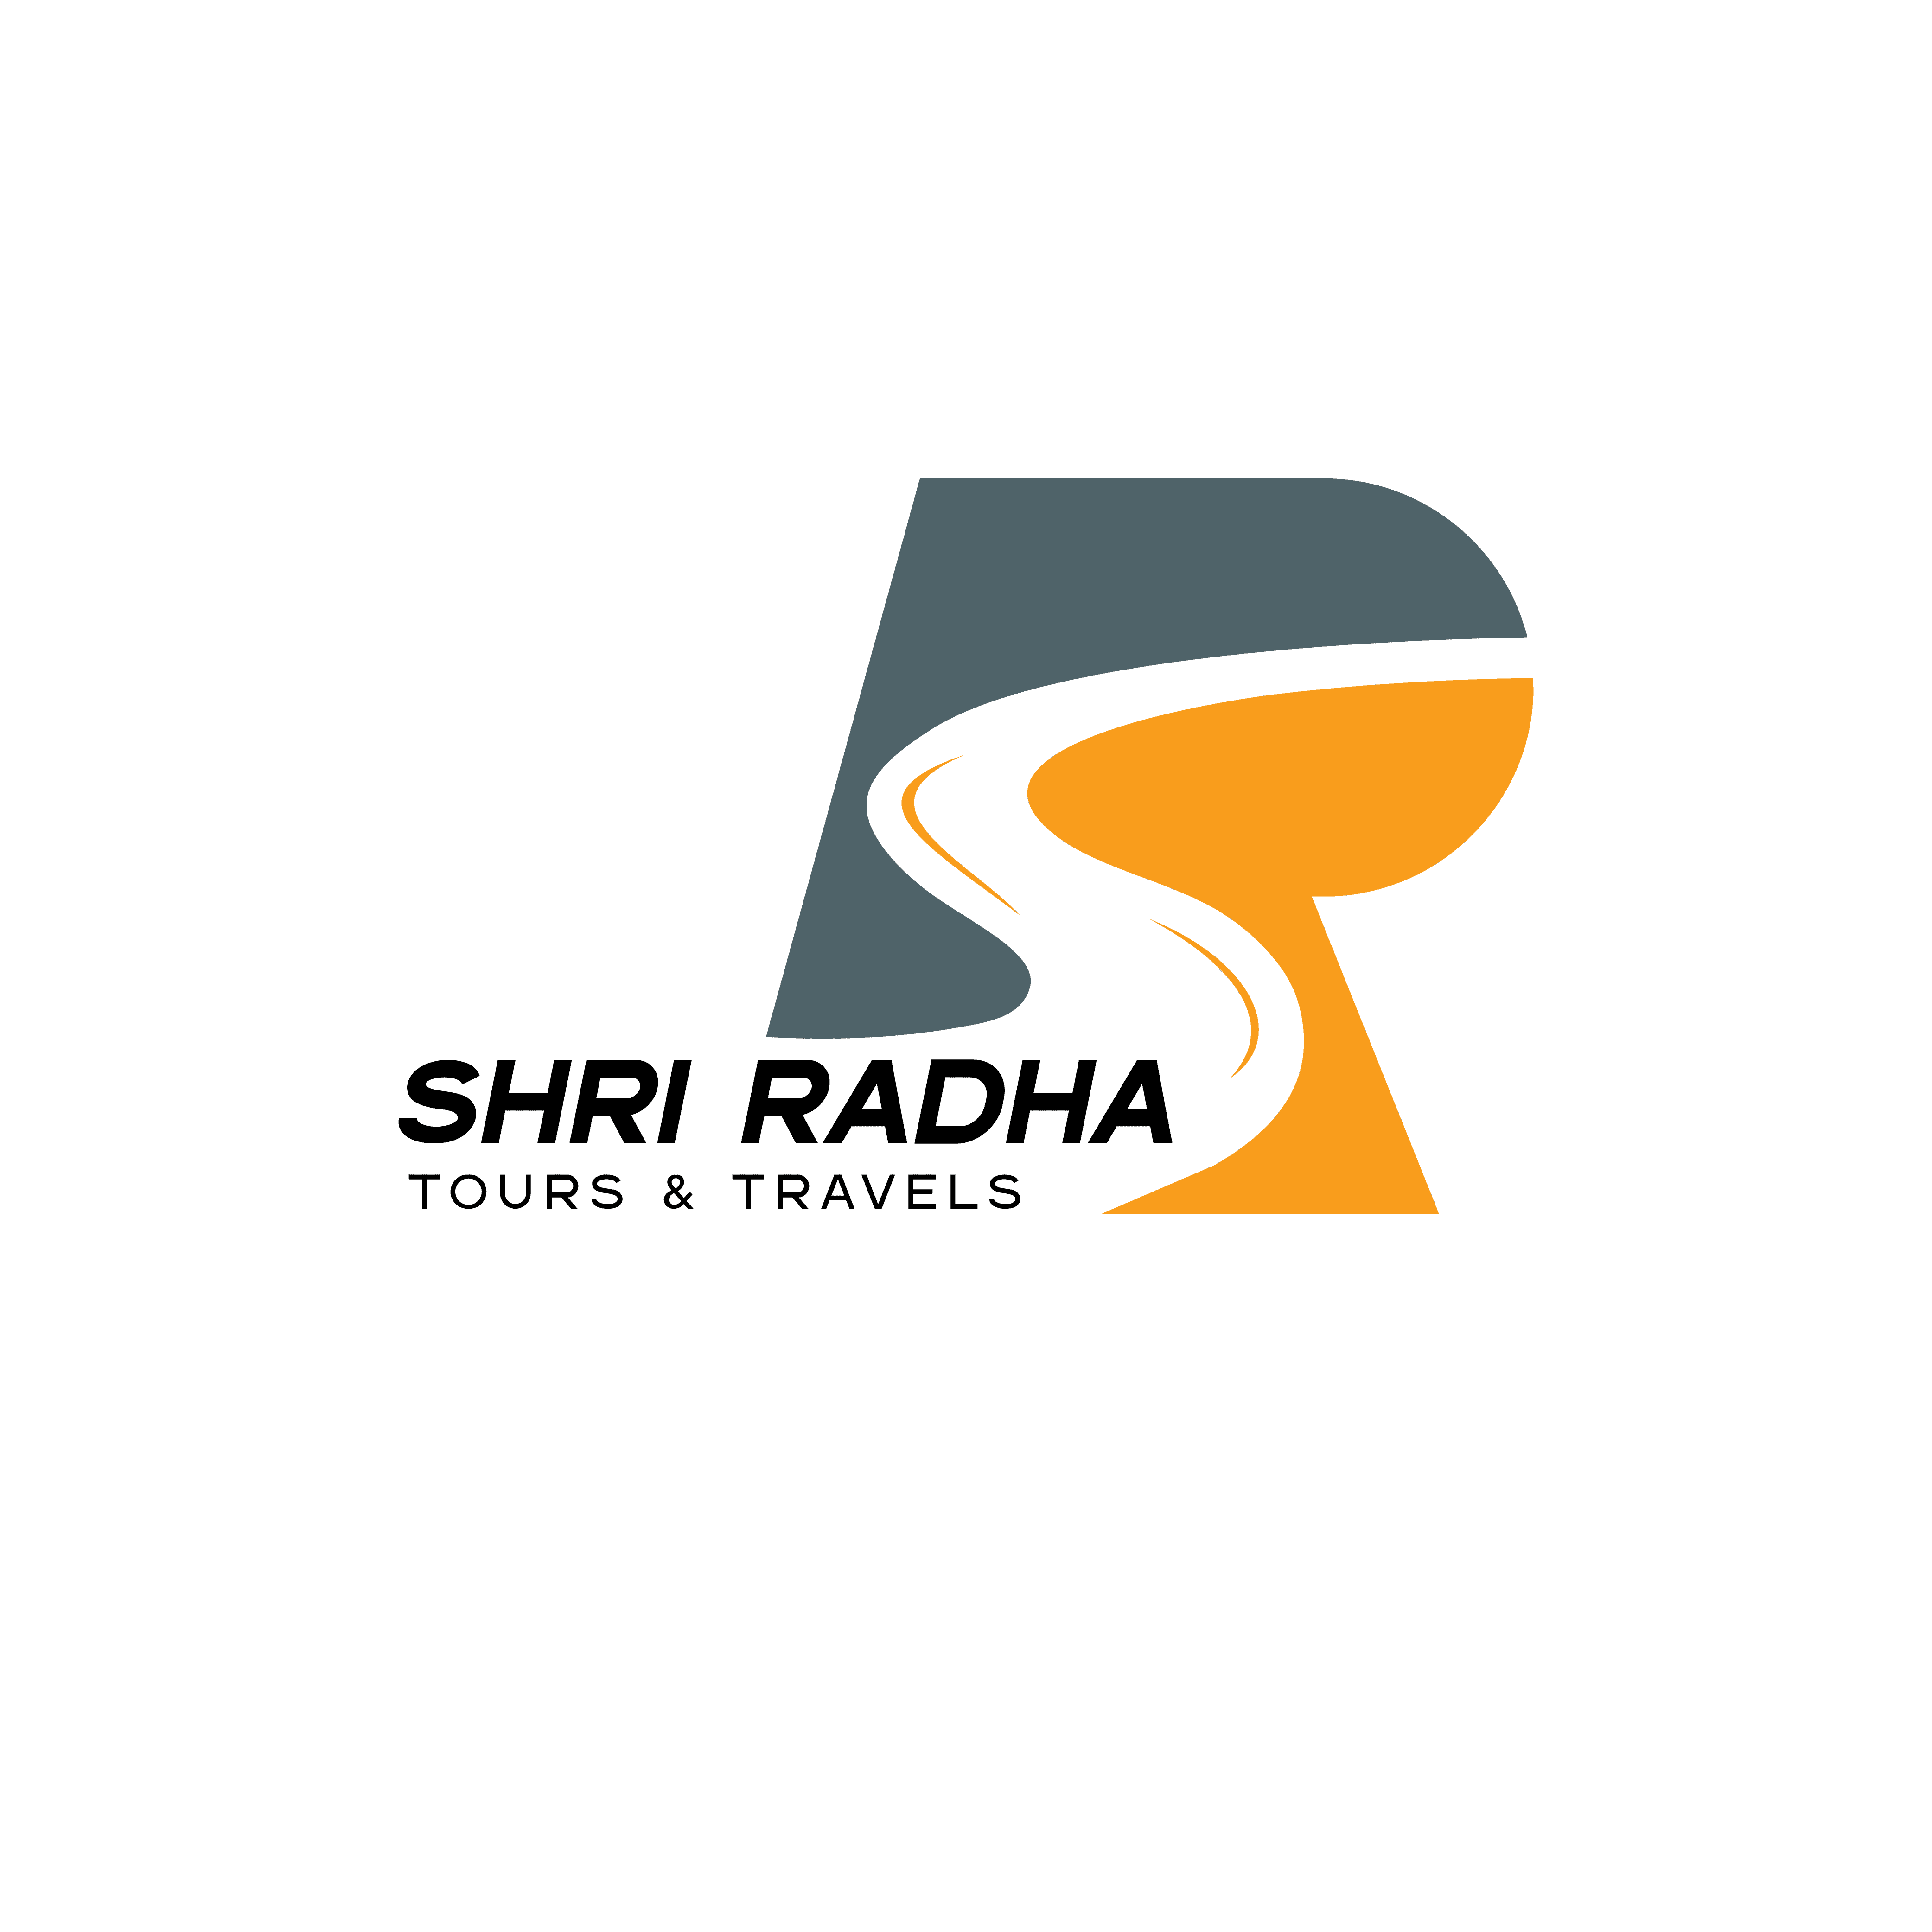 Shri Radha travels